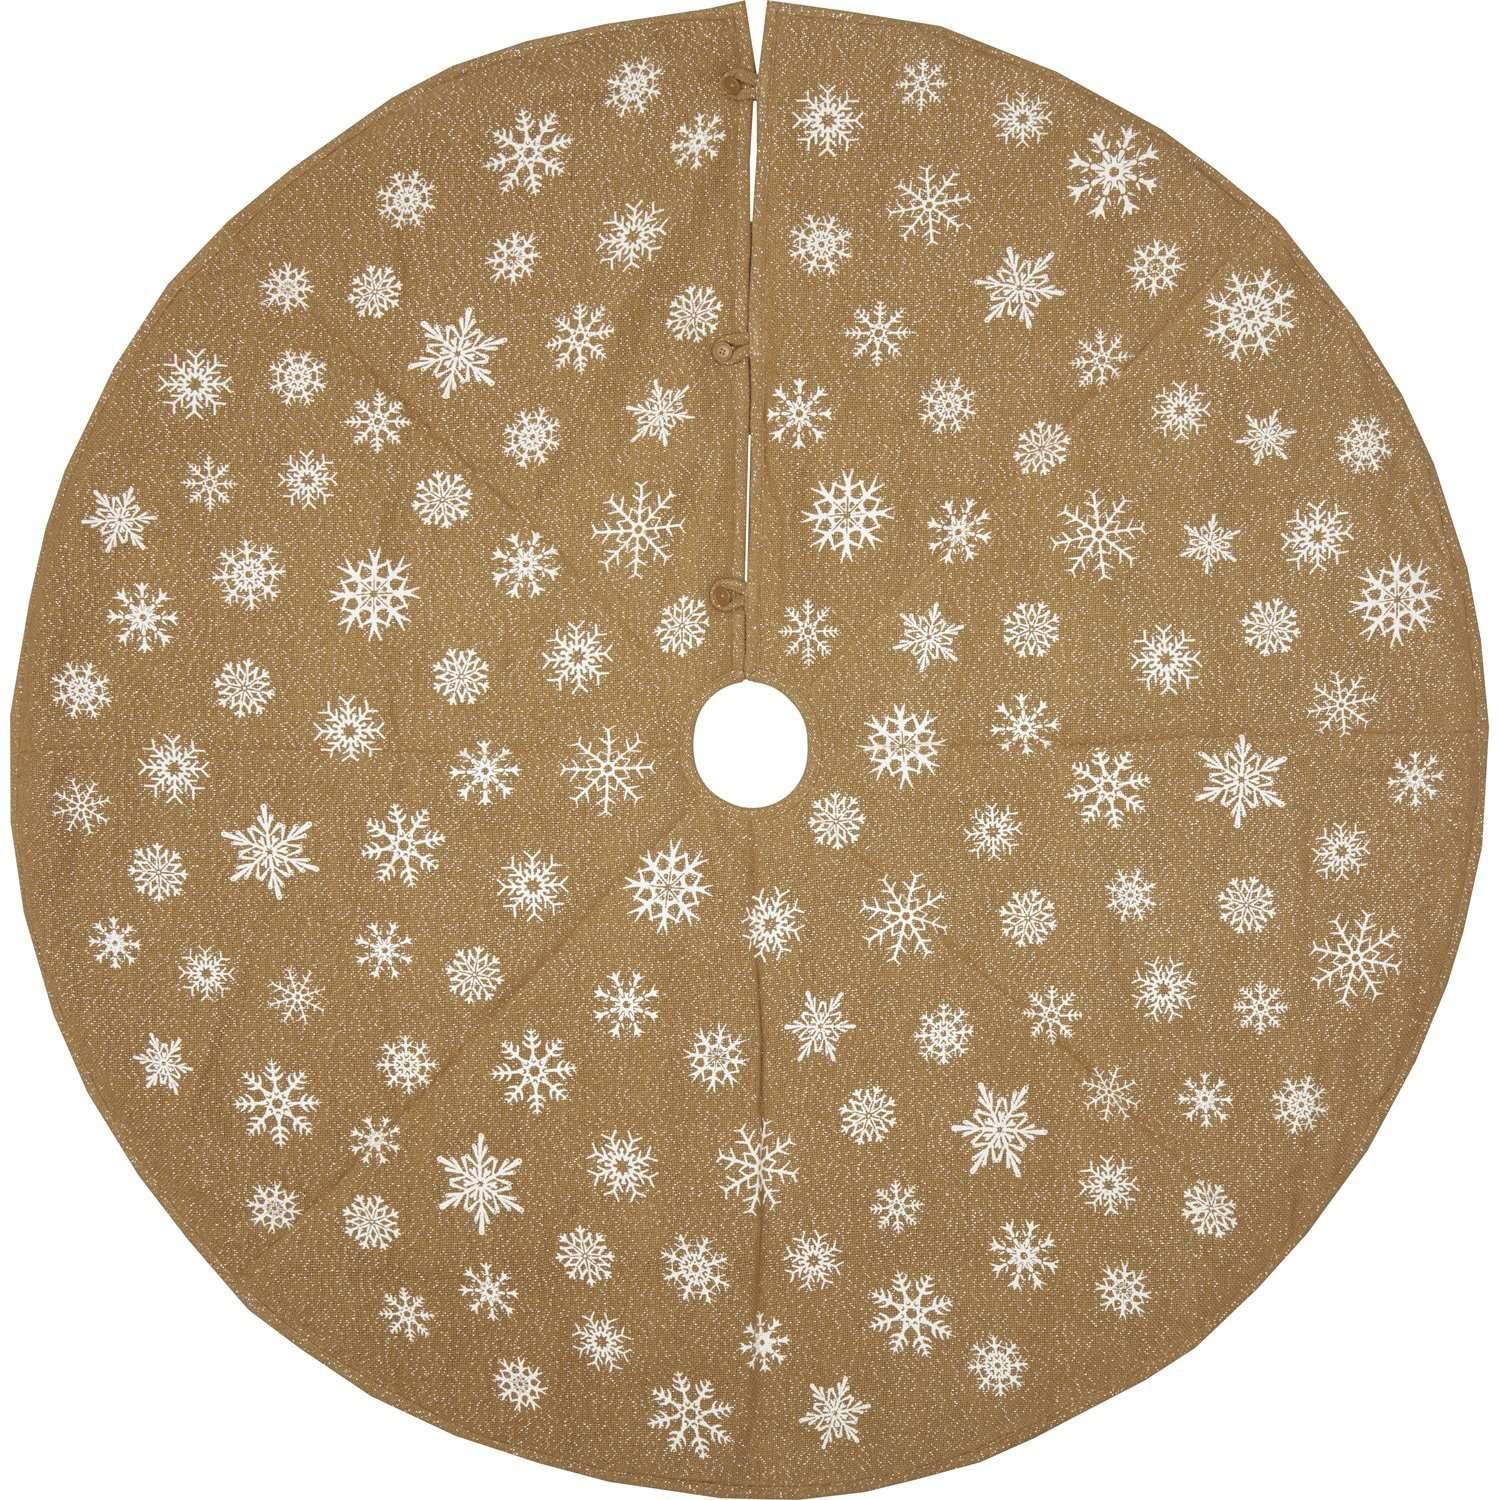 Snowflake Burlap Natural Christmas Tree Skirt 60 VHC Brands - The Fox Decor